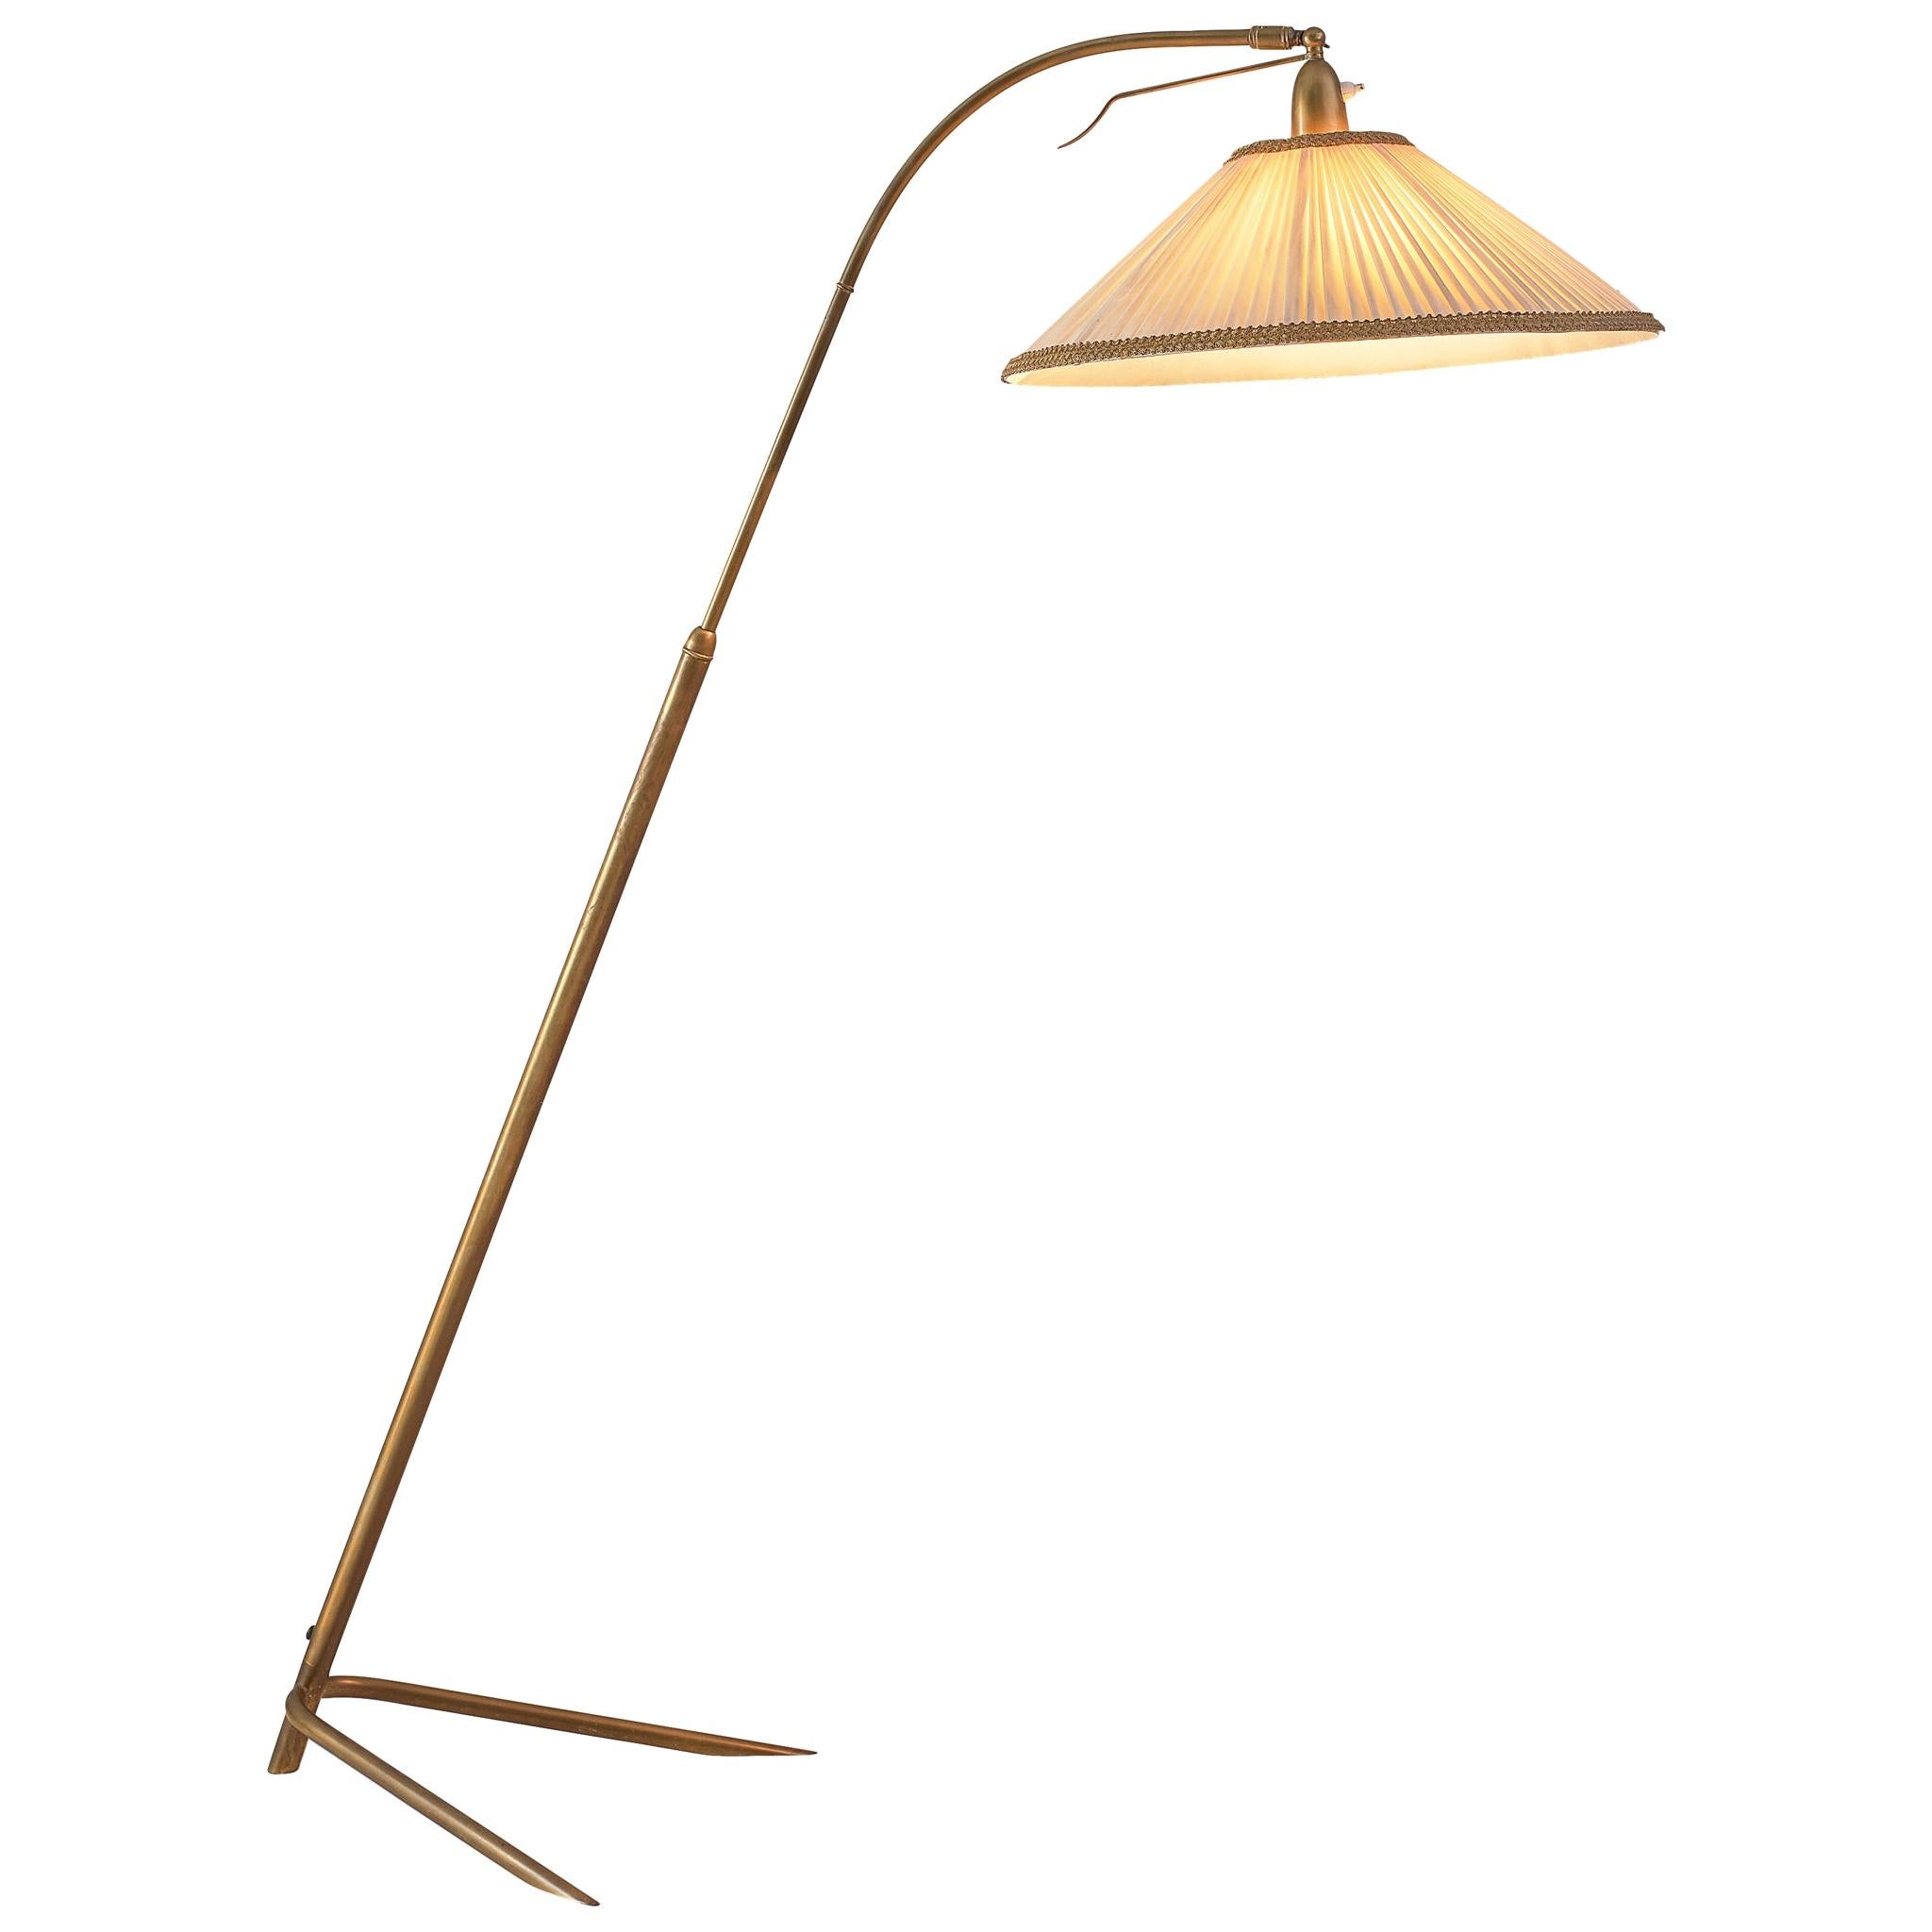 Italian Floor Lamp in Brass